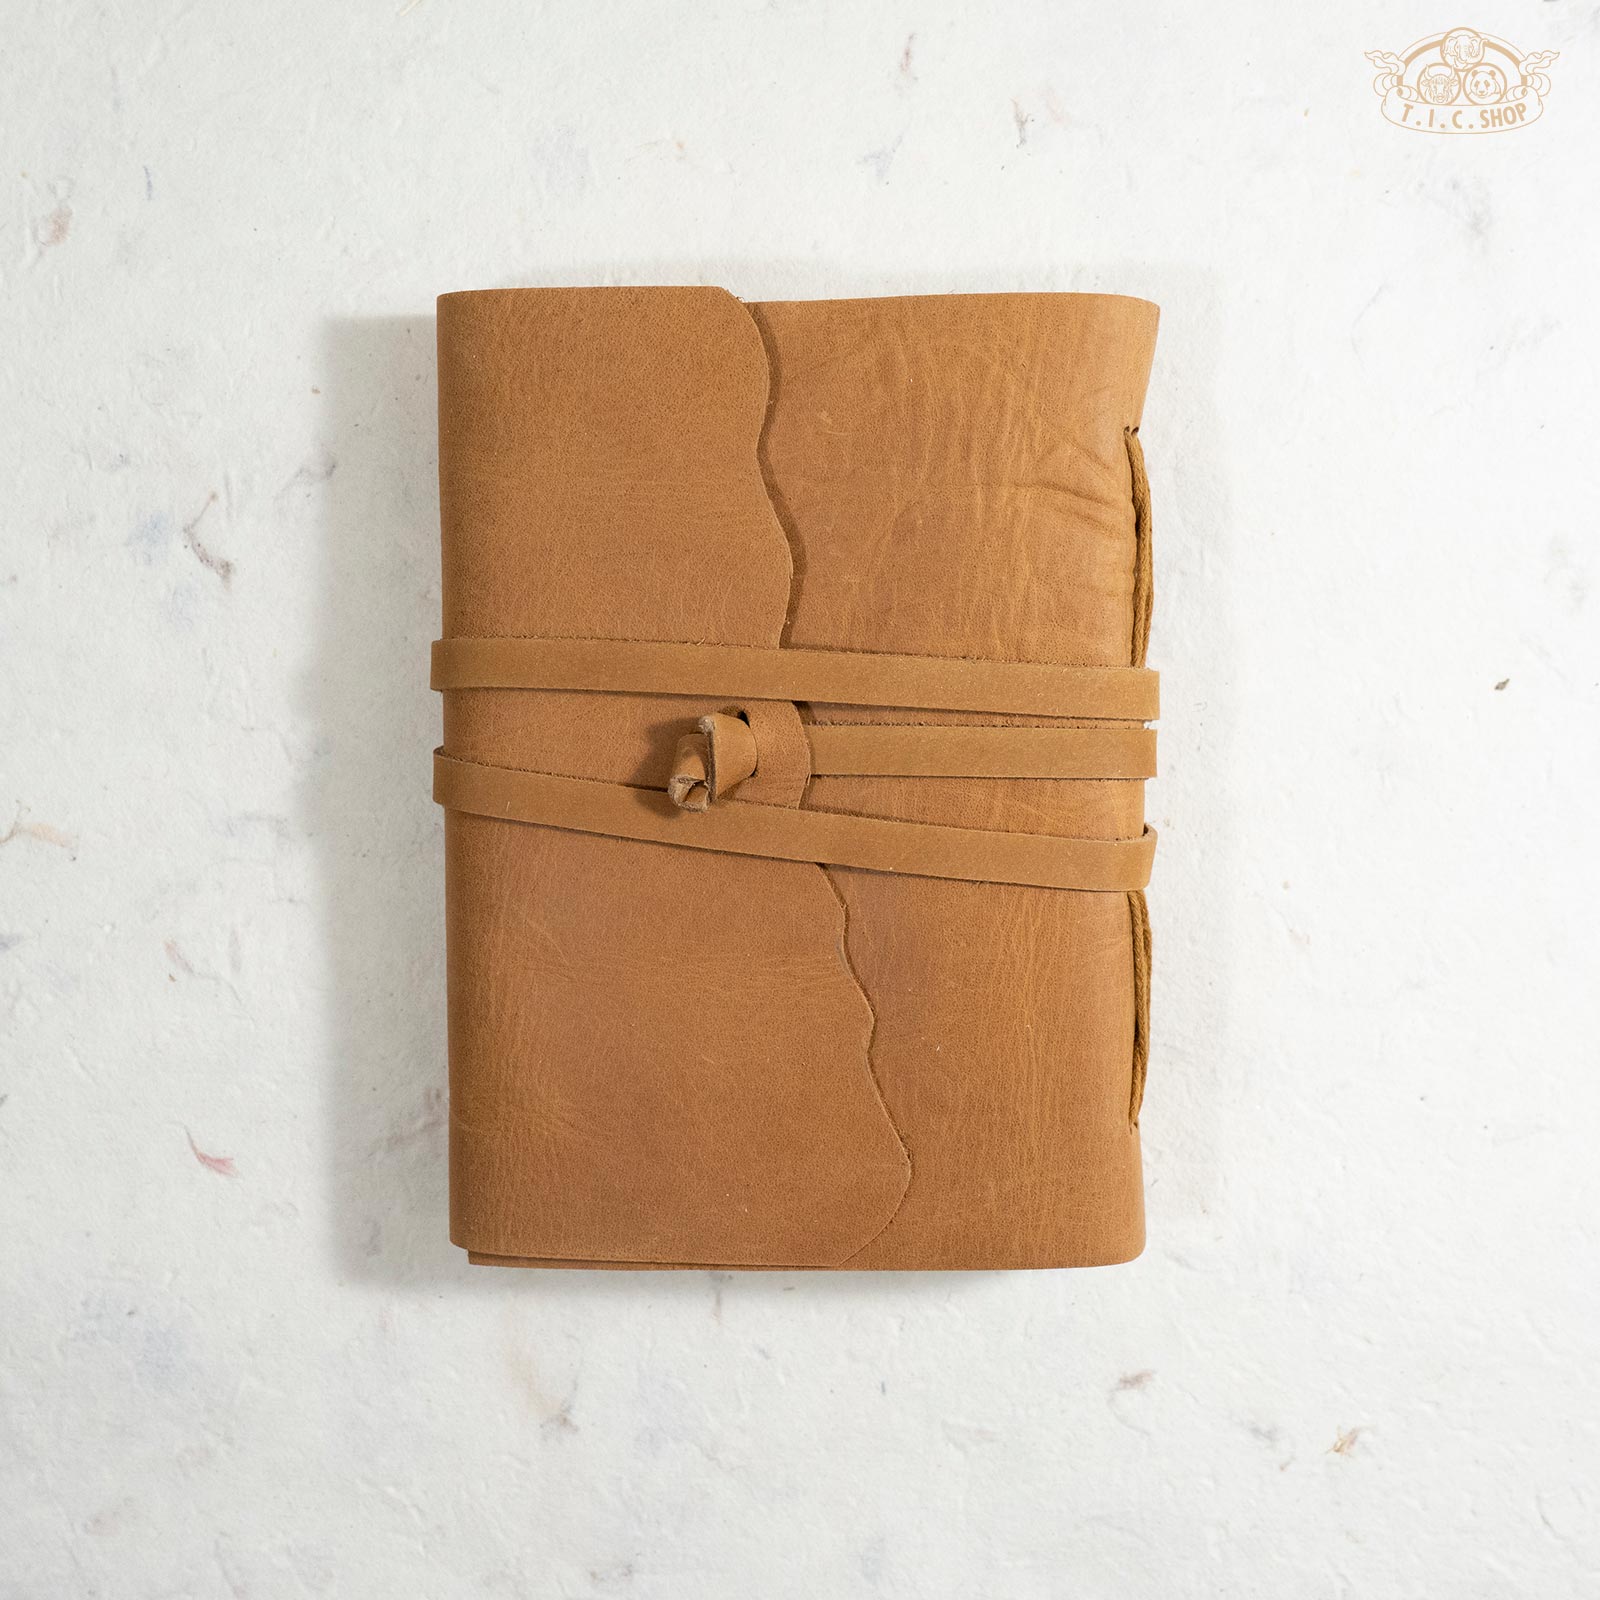 Leather Cover Lokta Paper Journal Notebook Medium